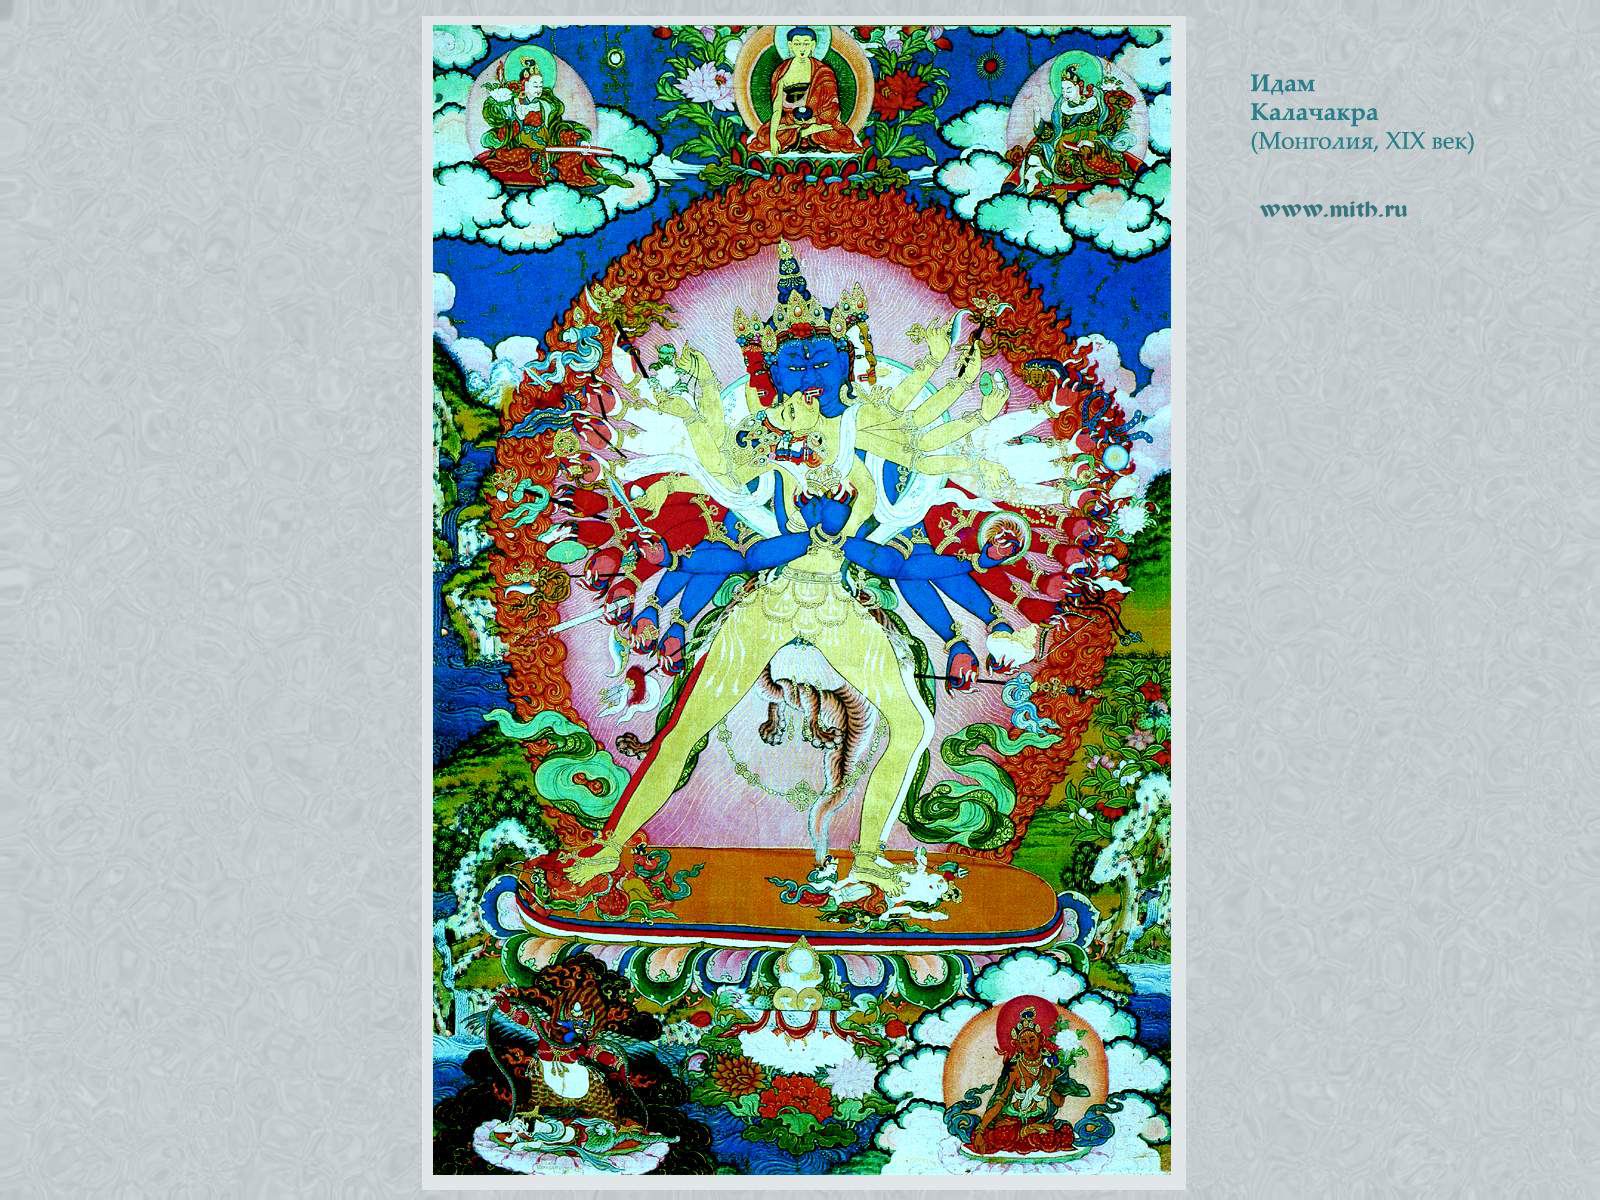 Калачакра,
Гаруда, Тара

перейти к книге 'Тибетская живопись'